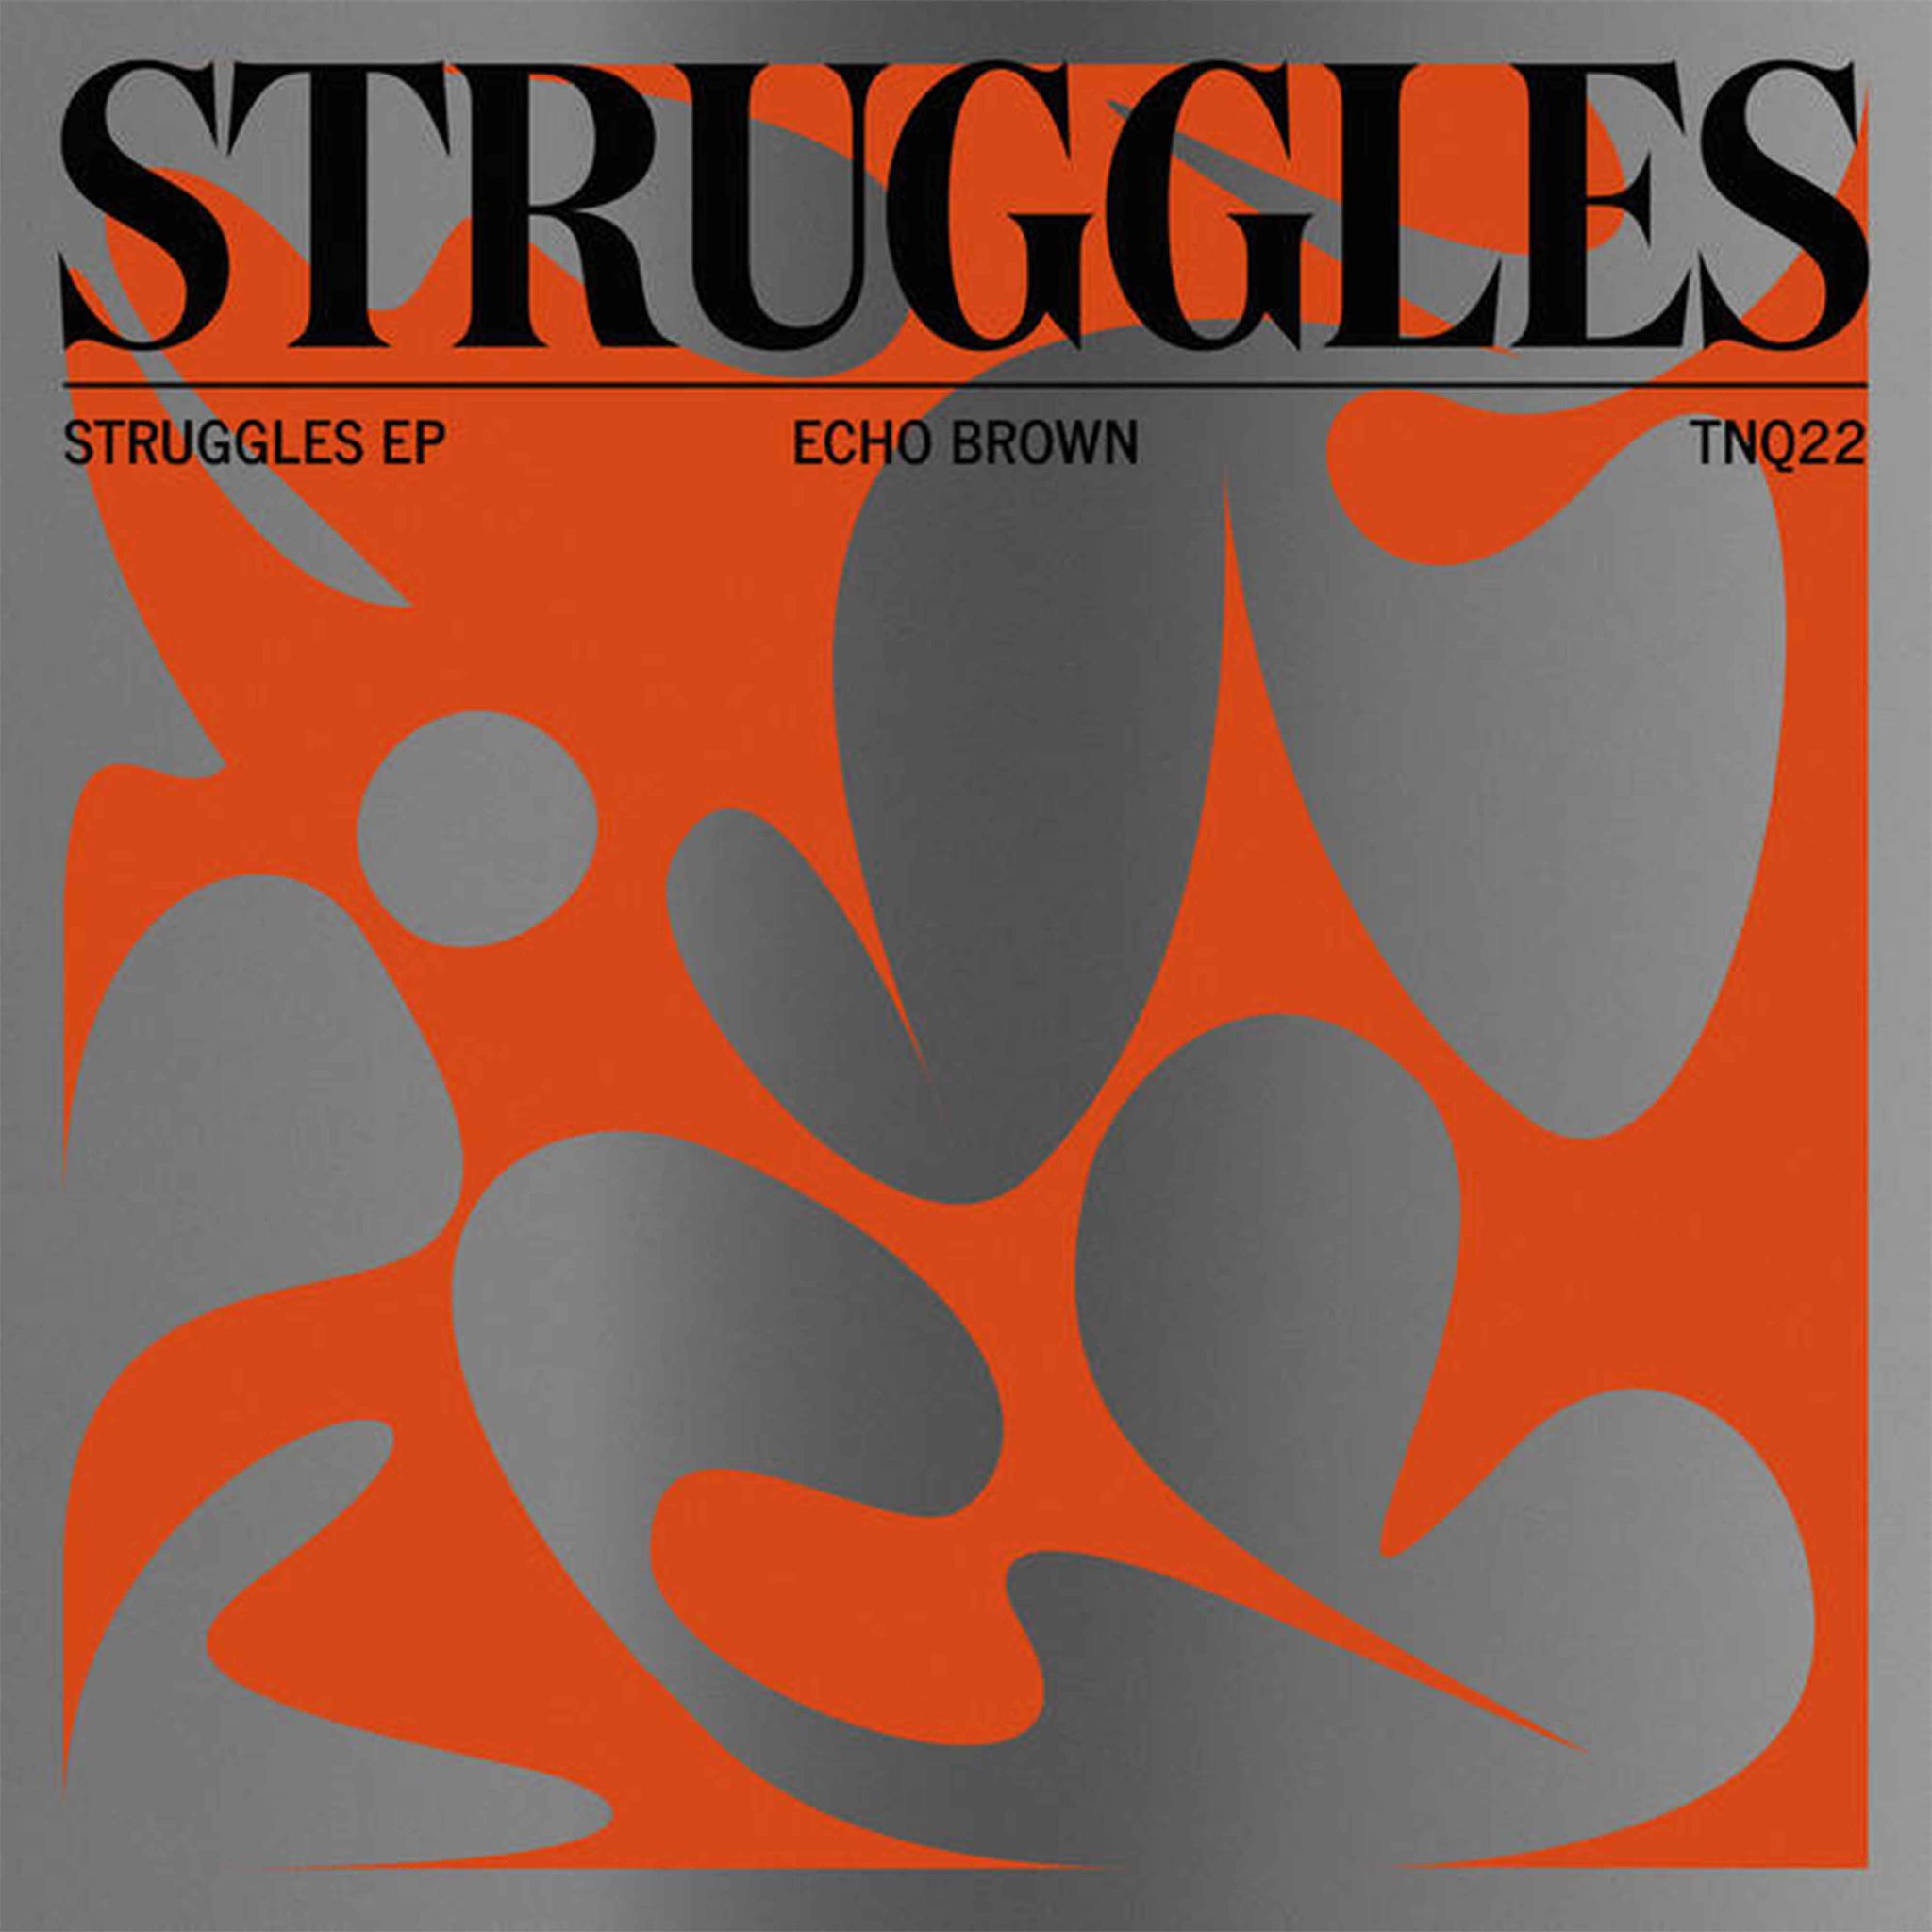 Echo Brown 'Struggles EP' 12"